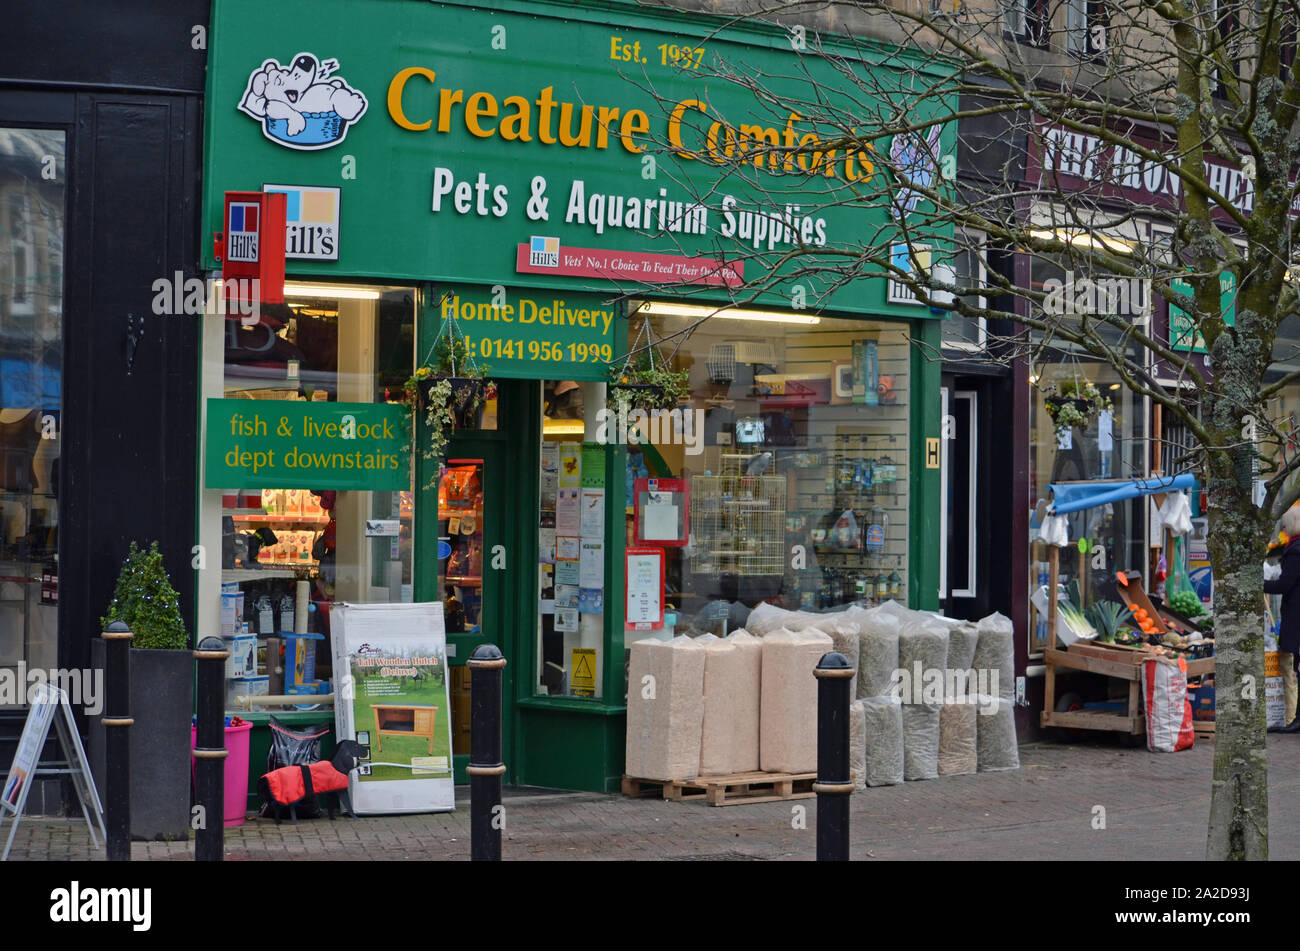 Creature Comforts Pet and Aquarium Supply shop in Milngavie Shopping Precinct Stock Photo